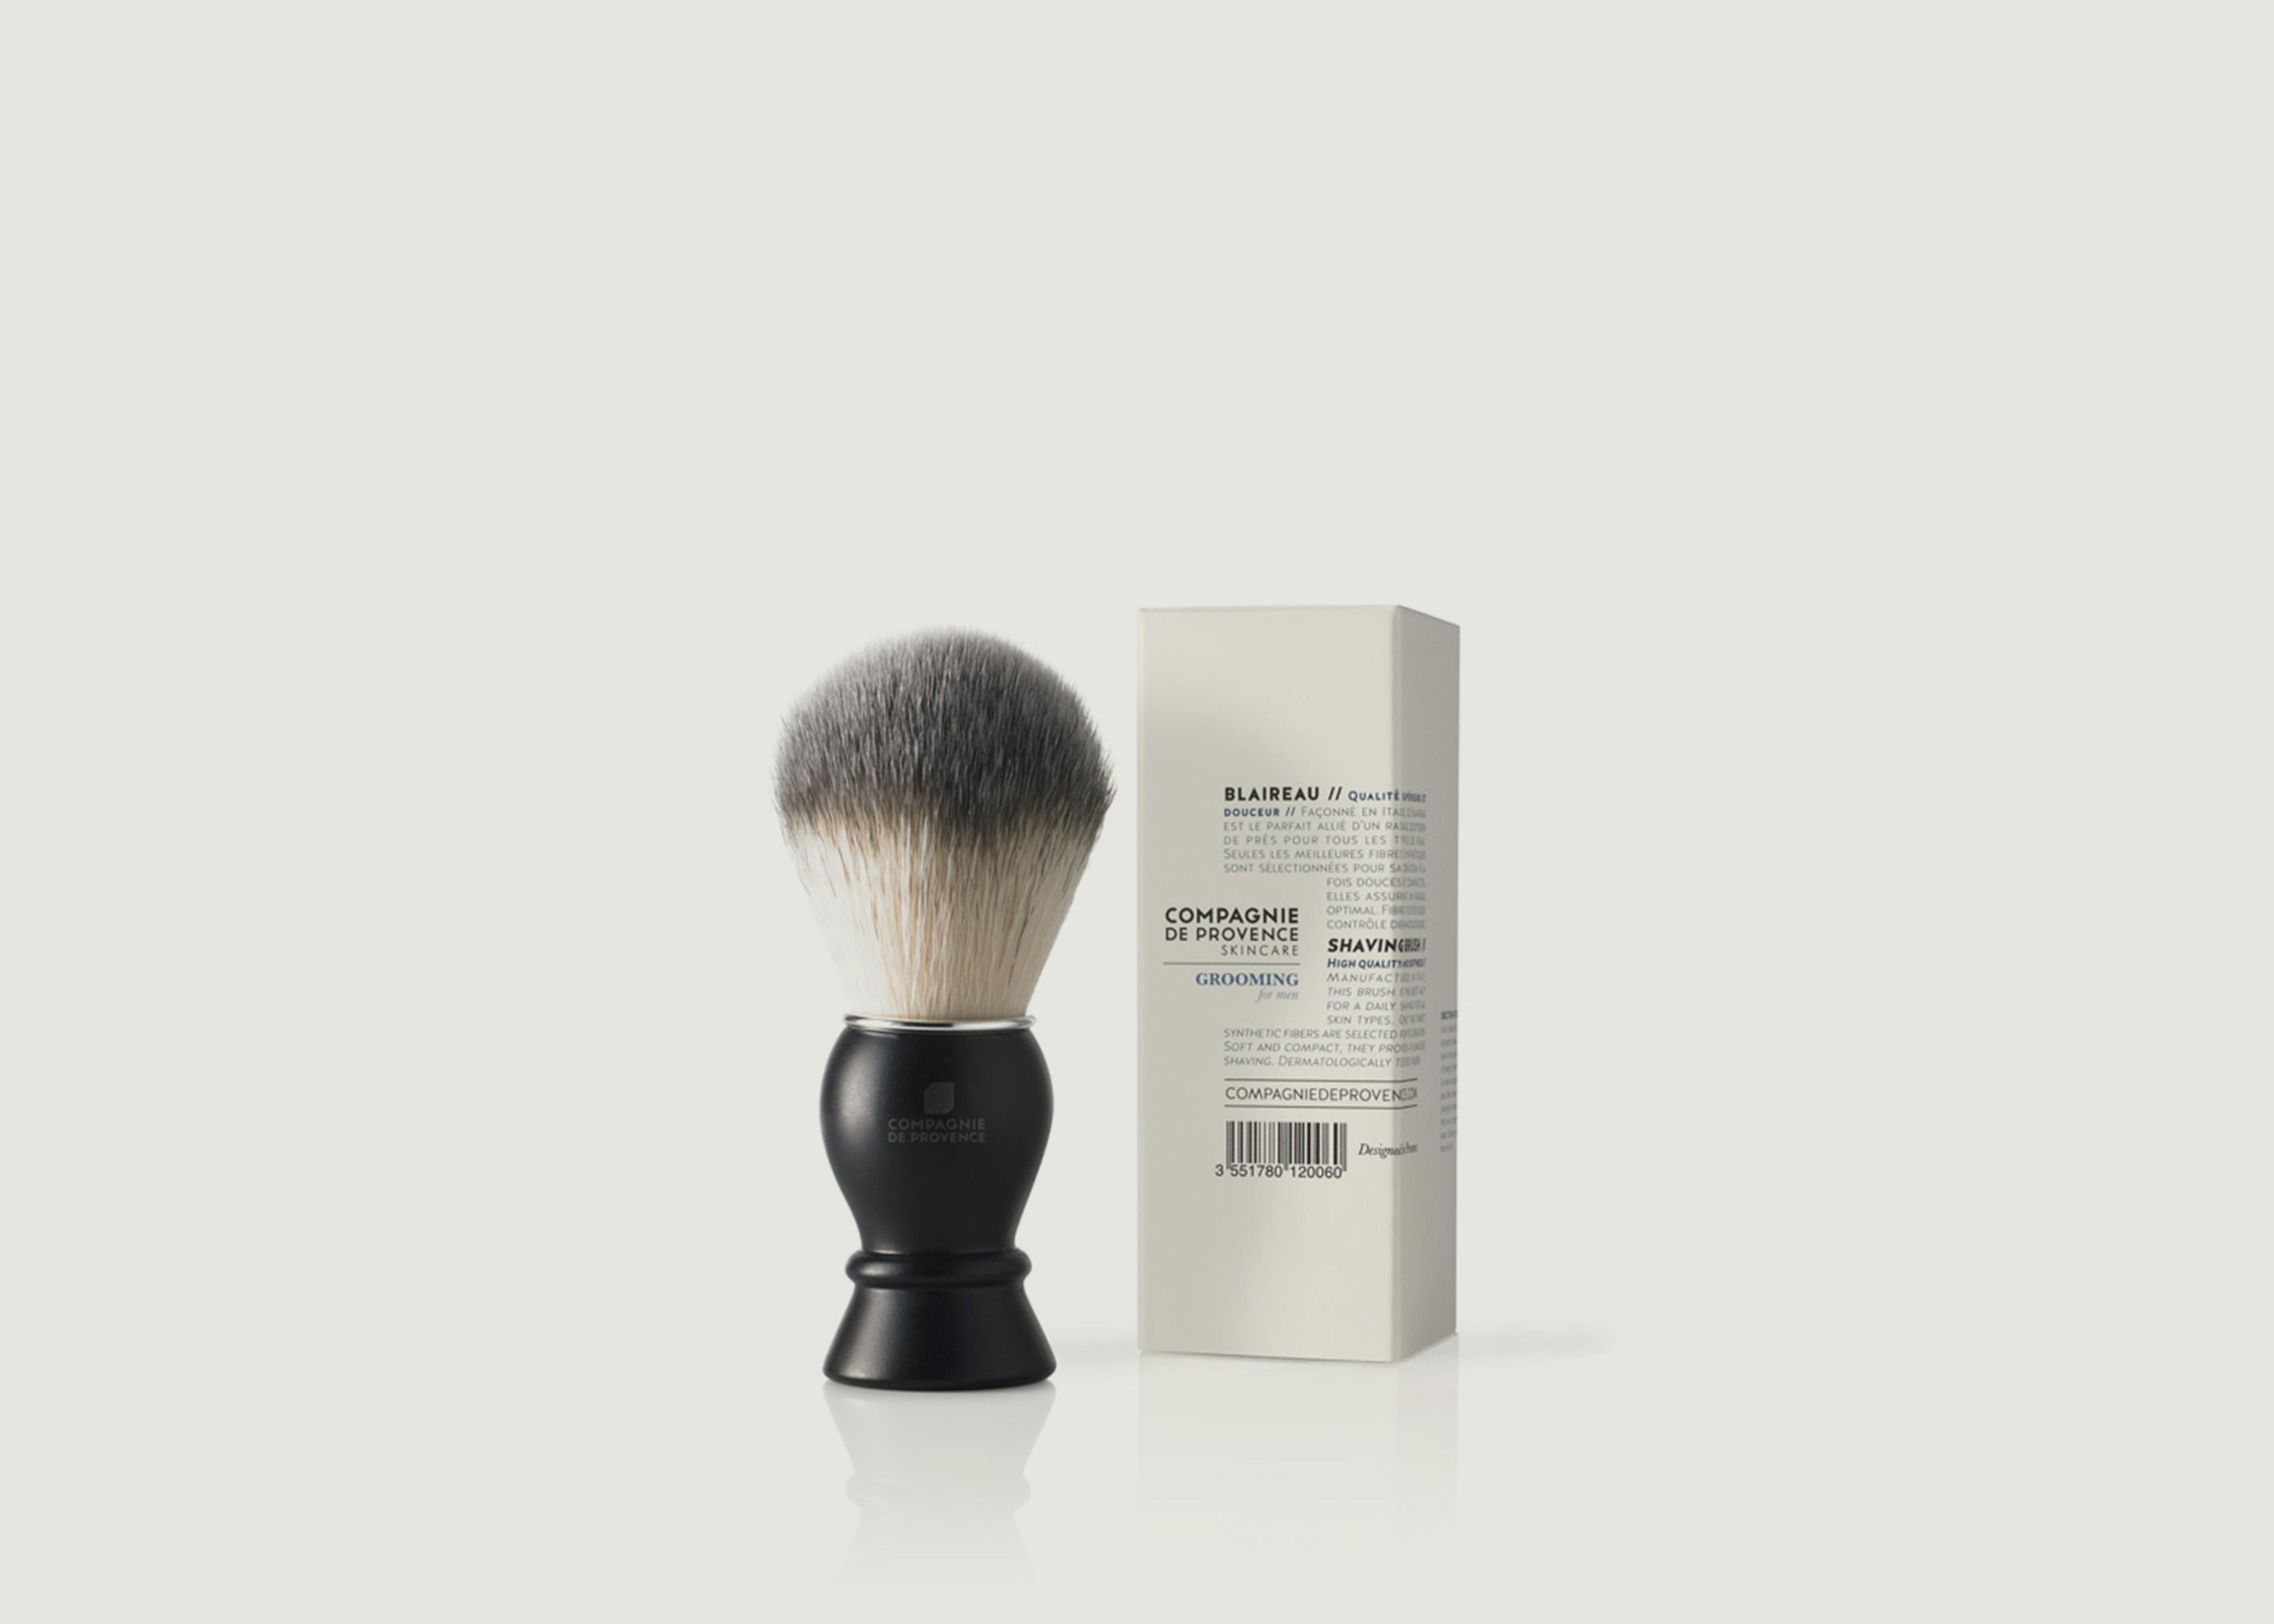 Shaving Brush - La Compagnie de Provence